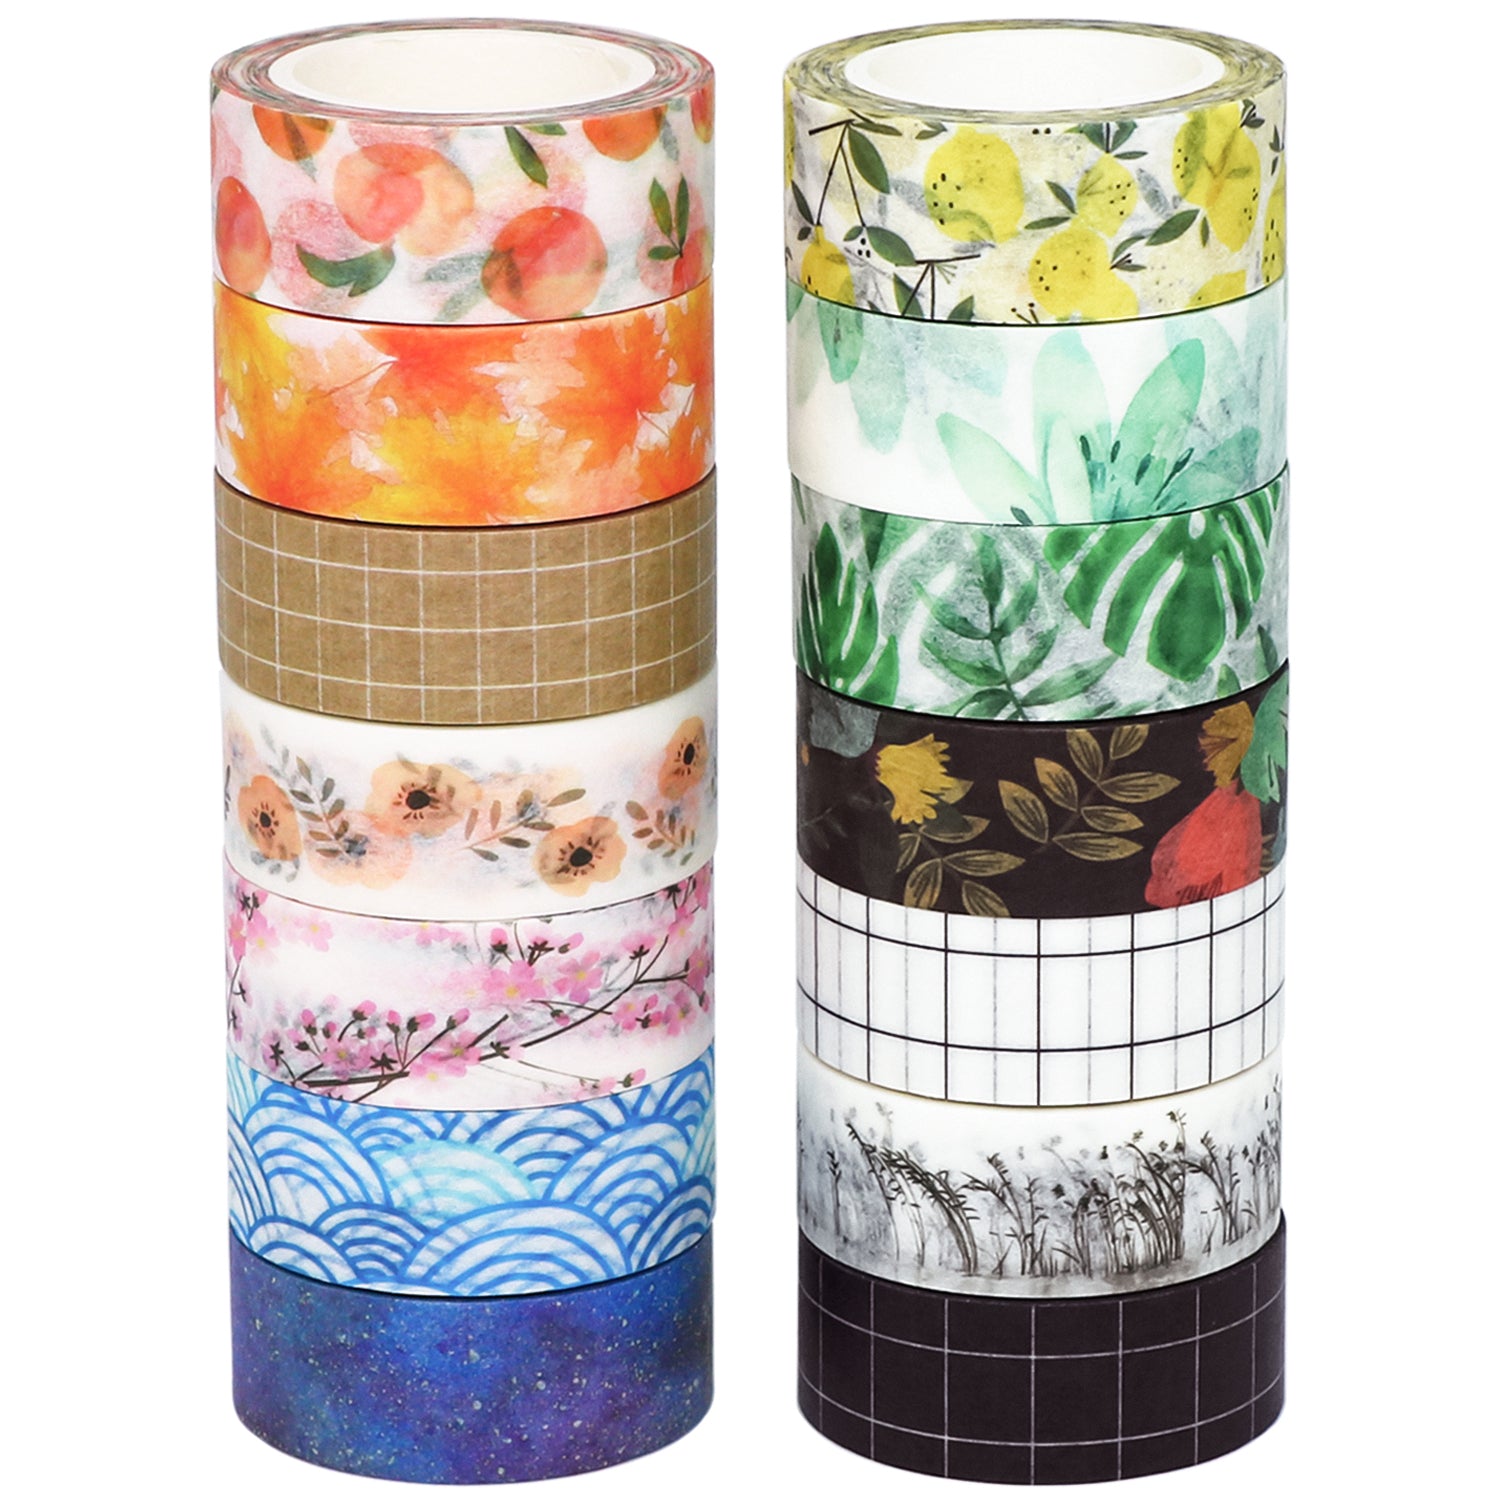 Knaid 40 Rolls of Slim Washi Tape Gift Box Set, Decorative Paper Tapes